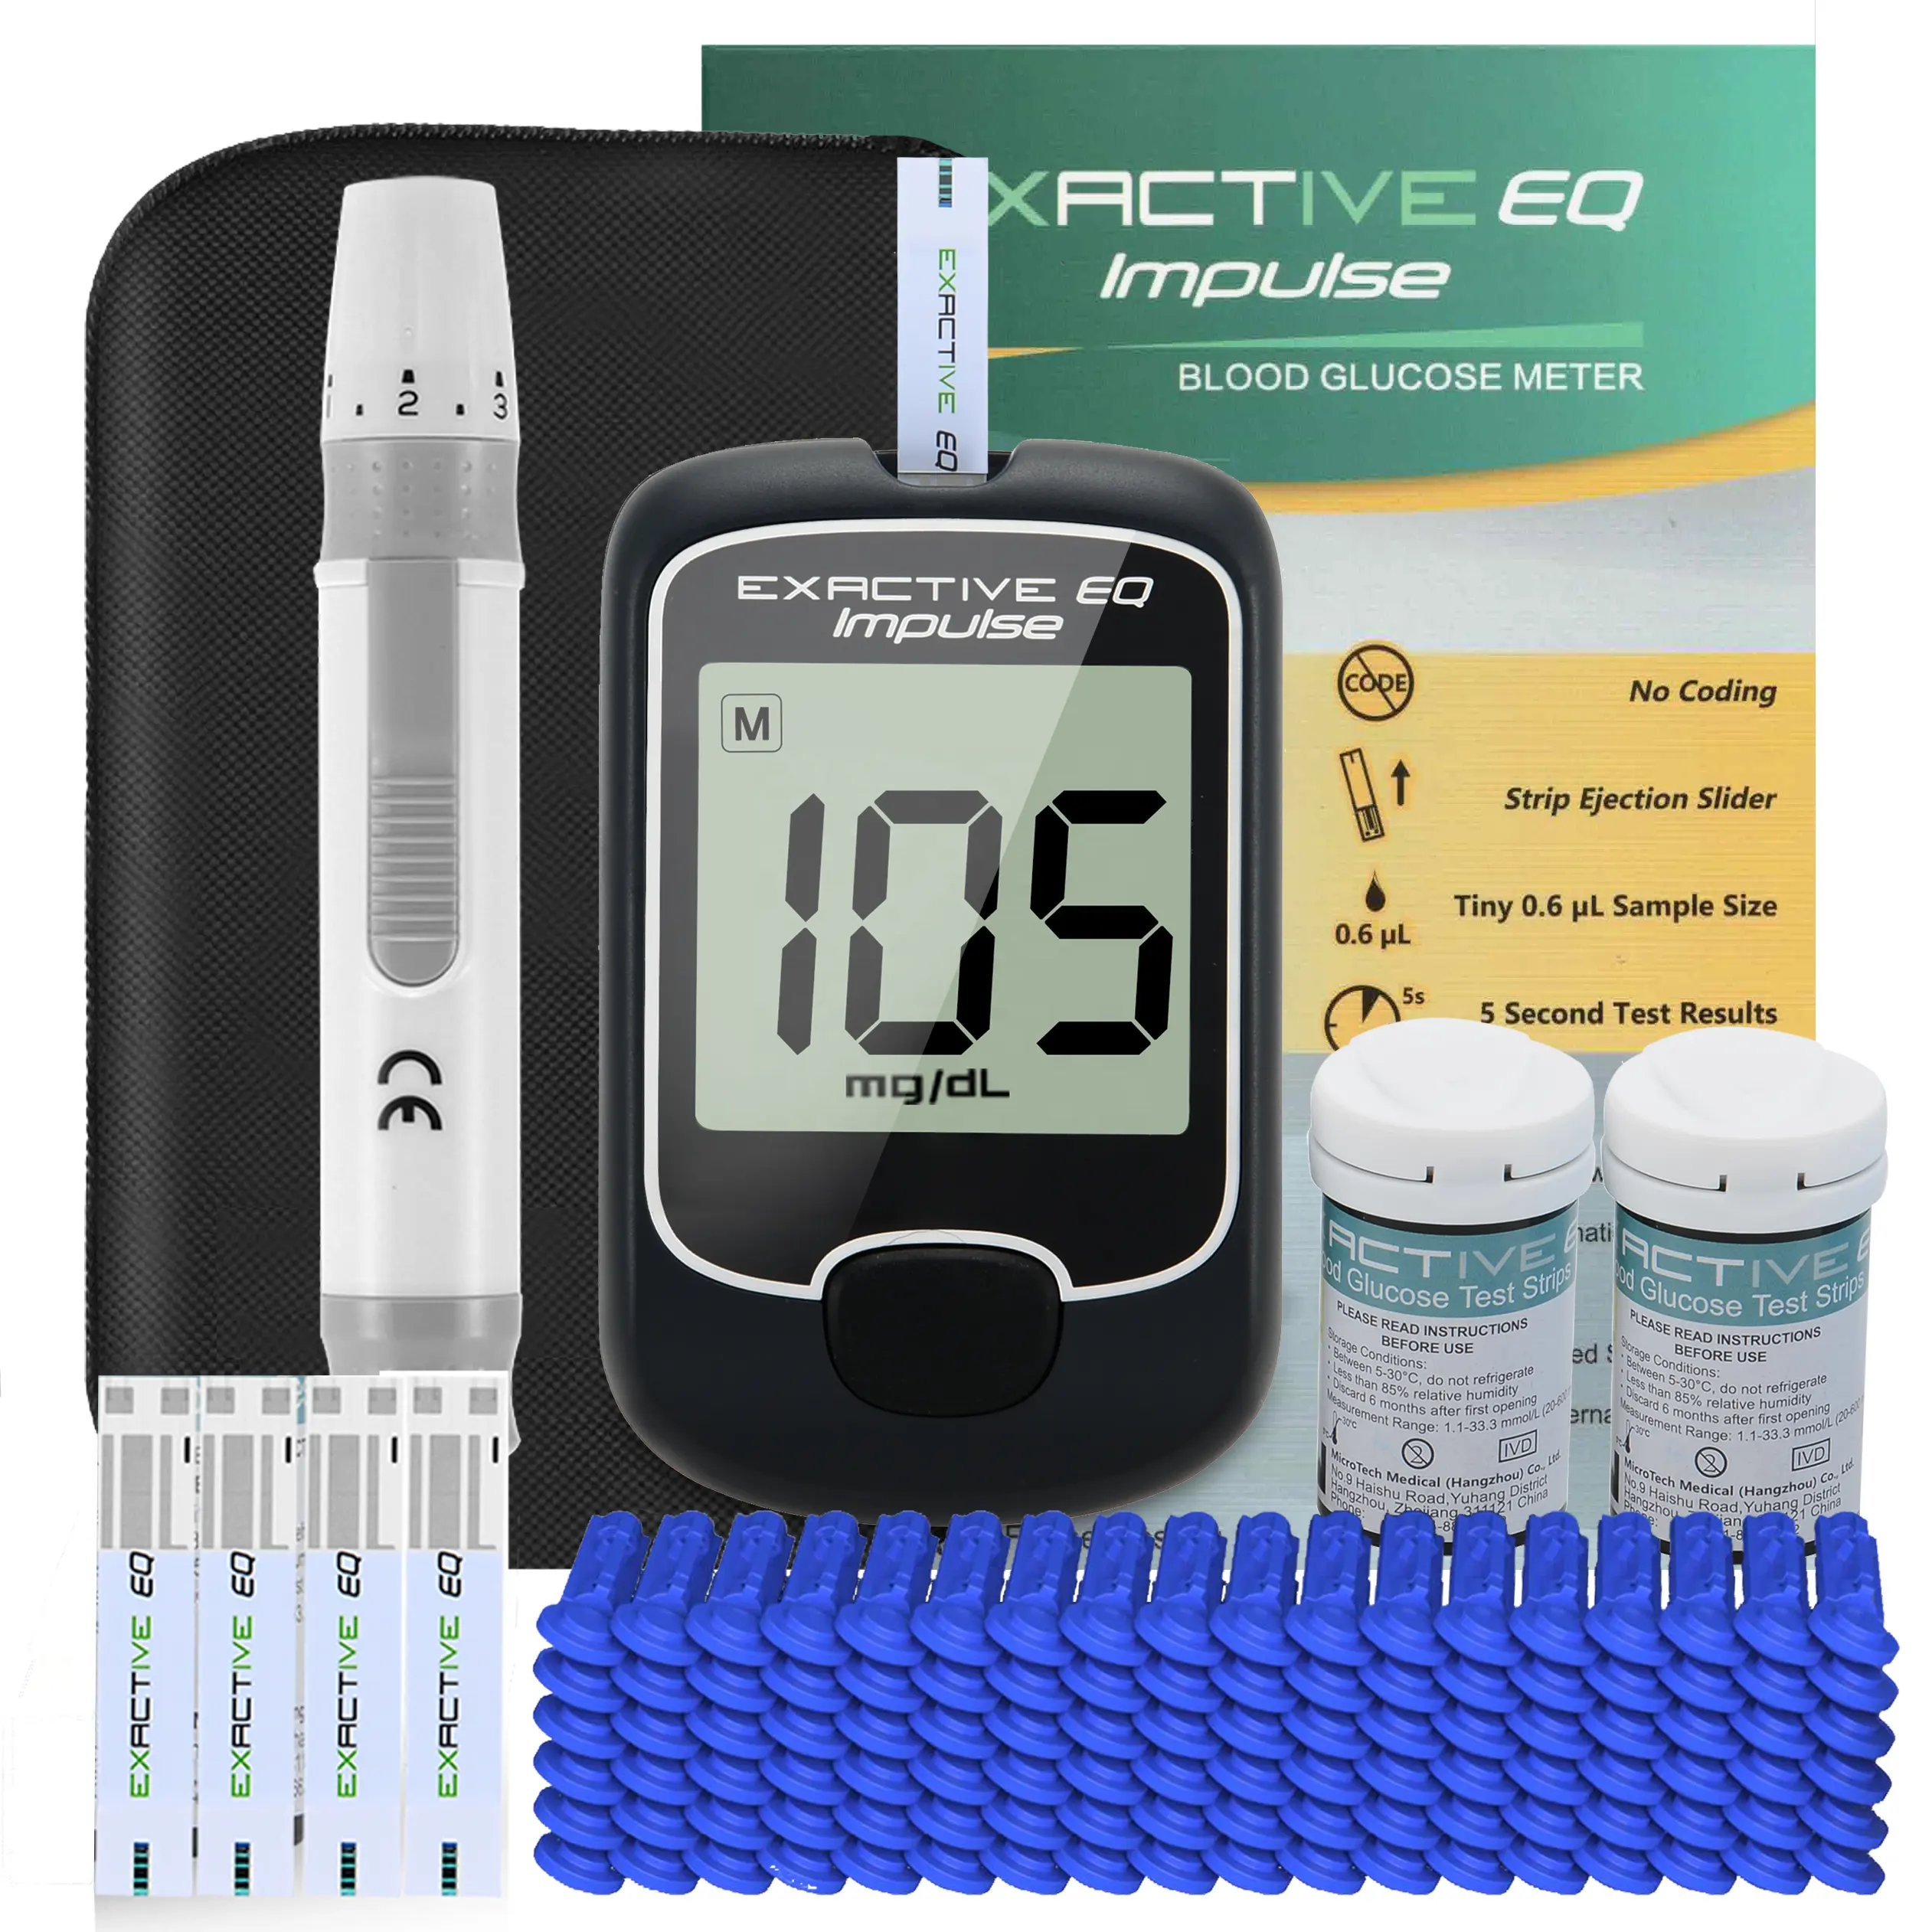 Exactive EQ impules glucose meter glucometro blood sugar monitor glucometer machine blood glucose meter with diabetic test strip